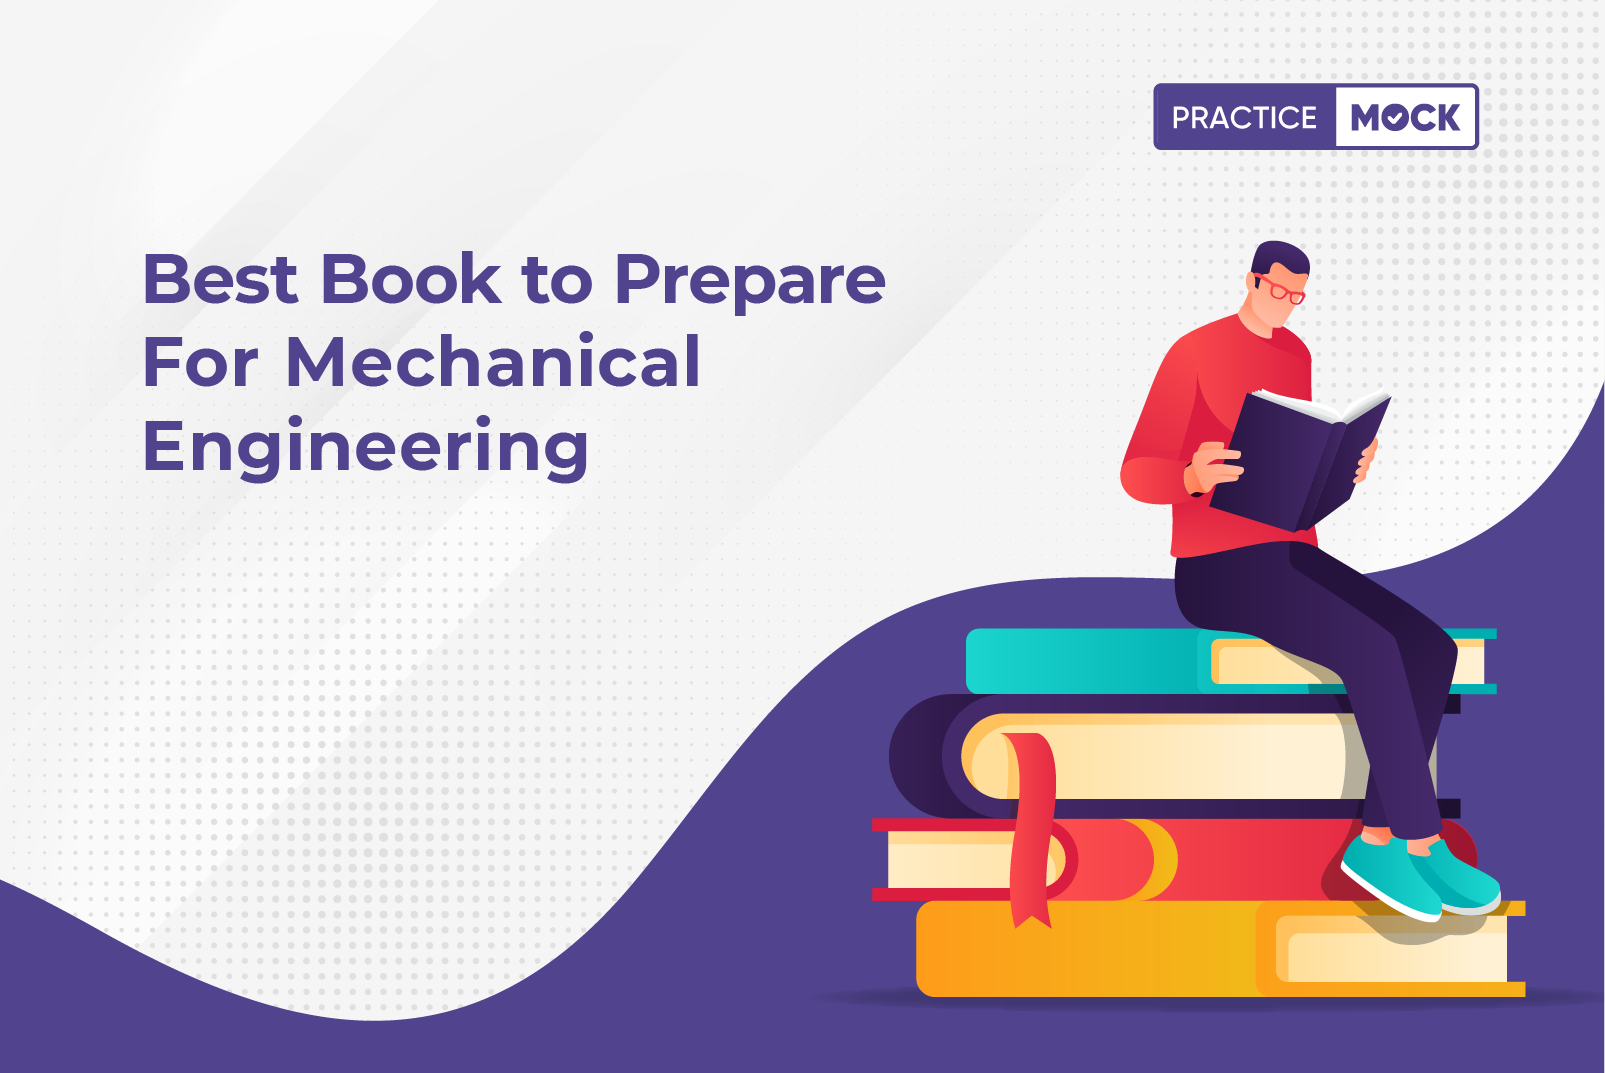 FI_Mechanical_Engineering_Books_040423-1